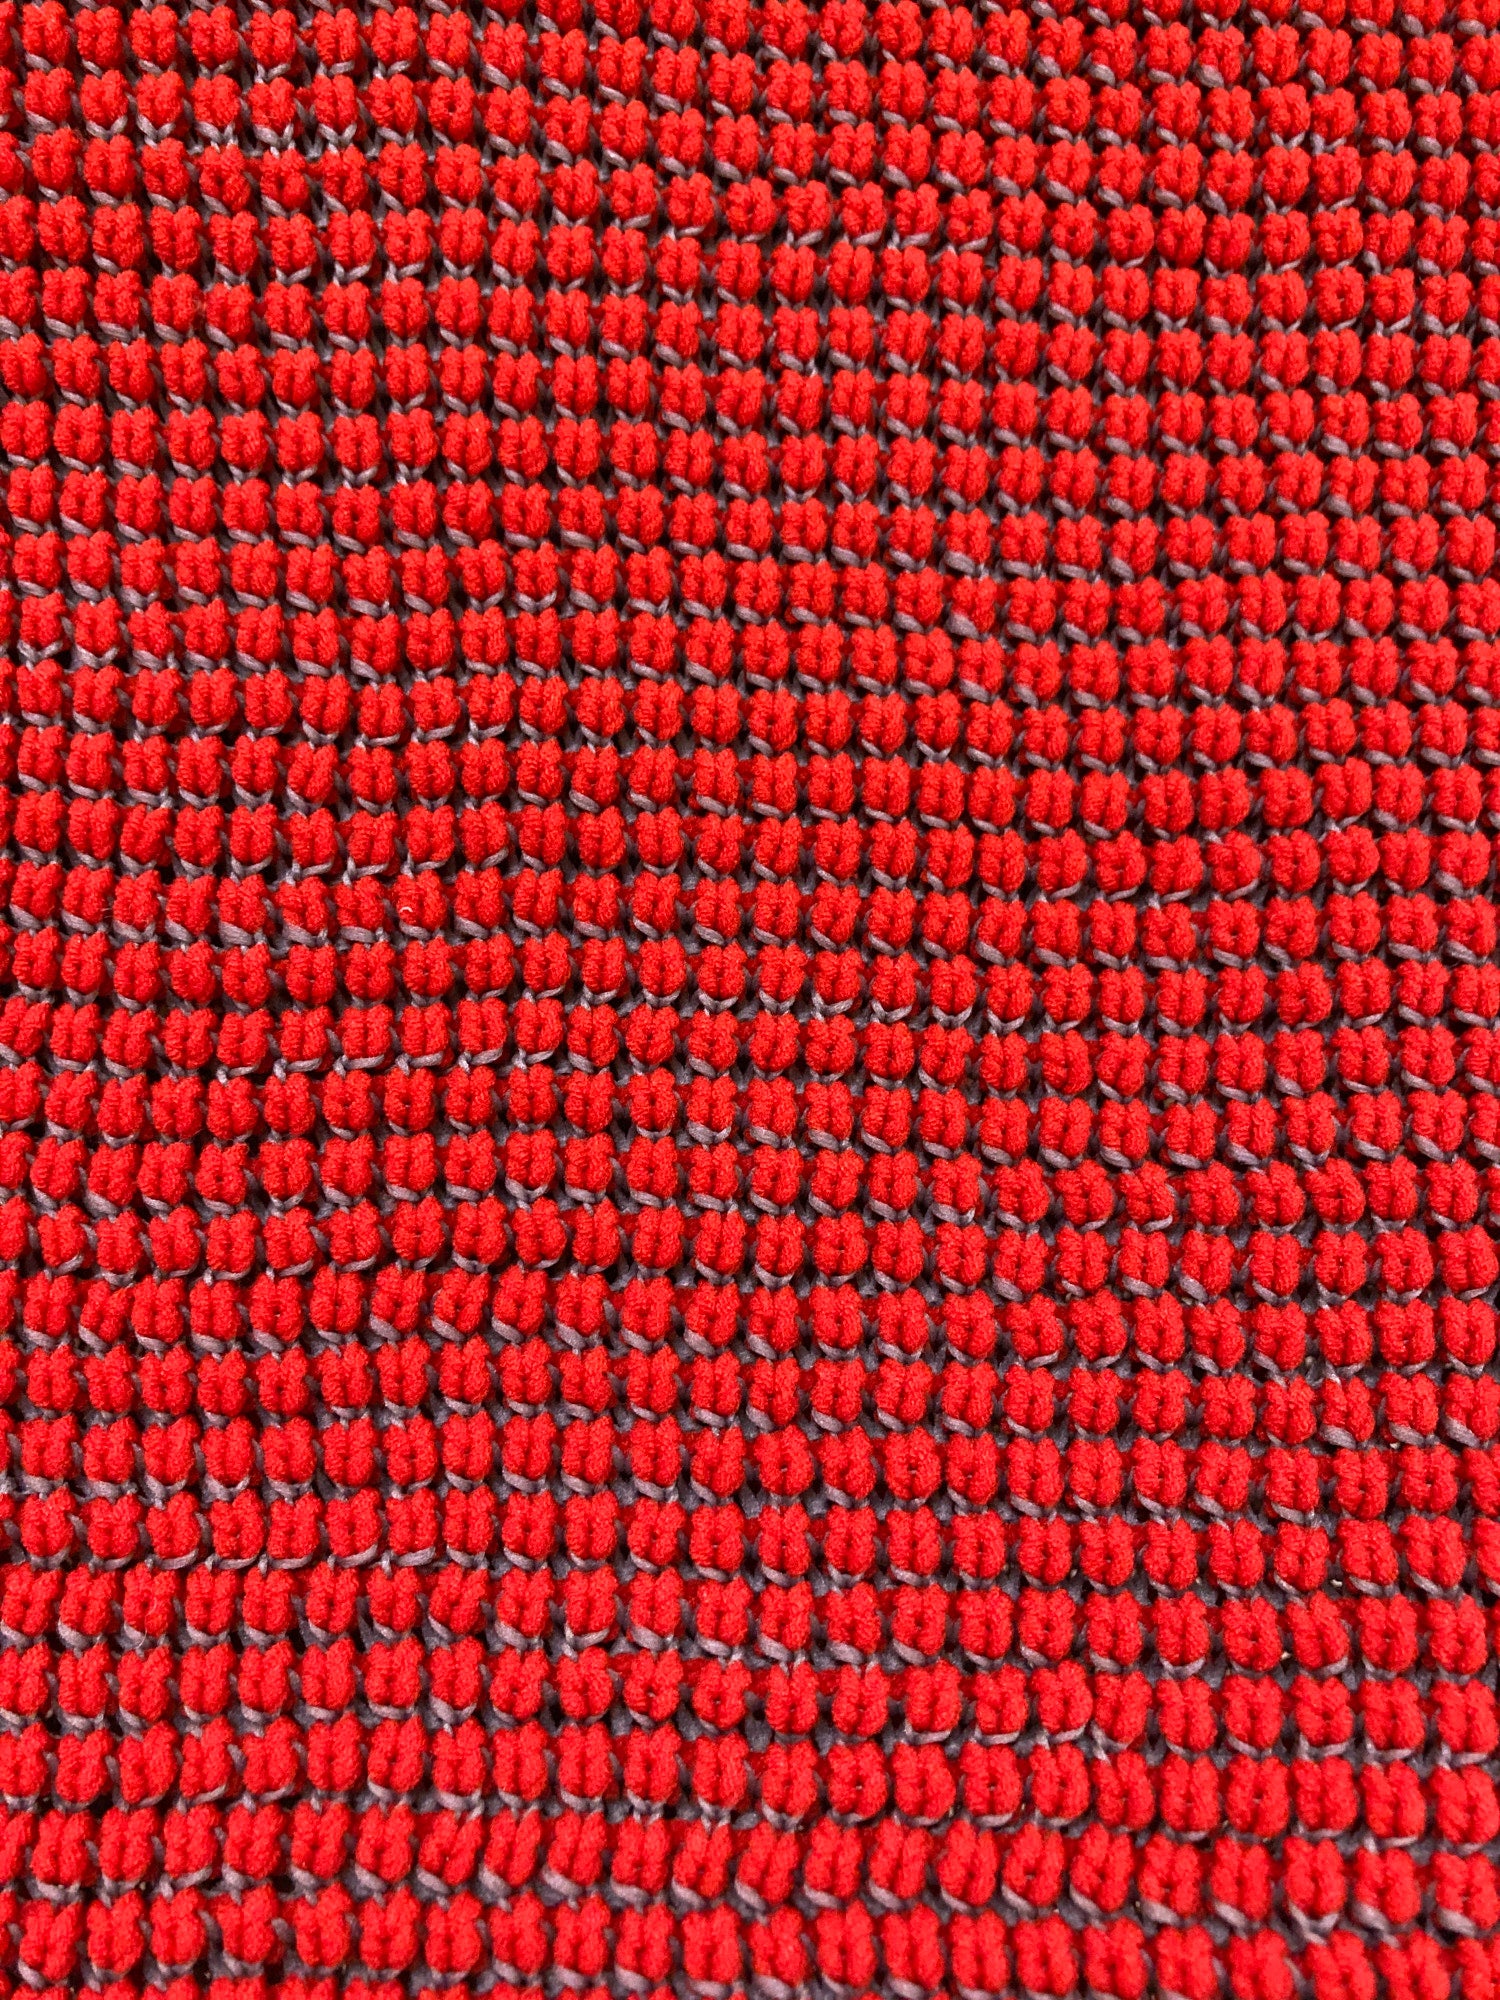 Trunk Hiroko Koshino grey red knit zipped cardigan - size 40